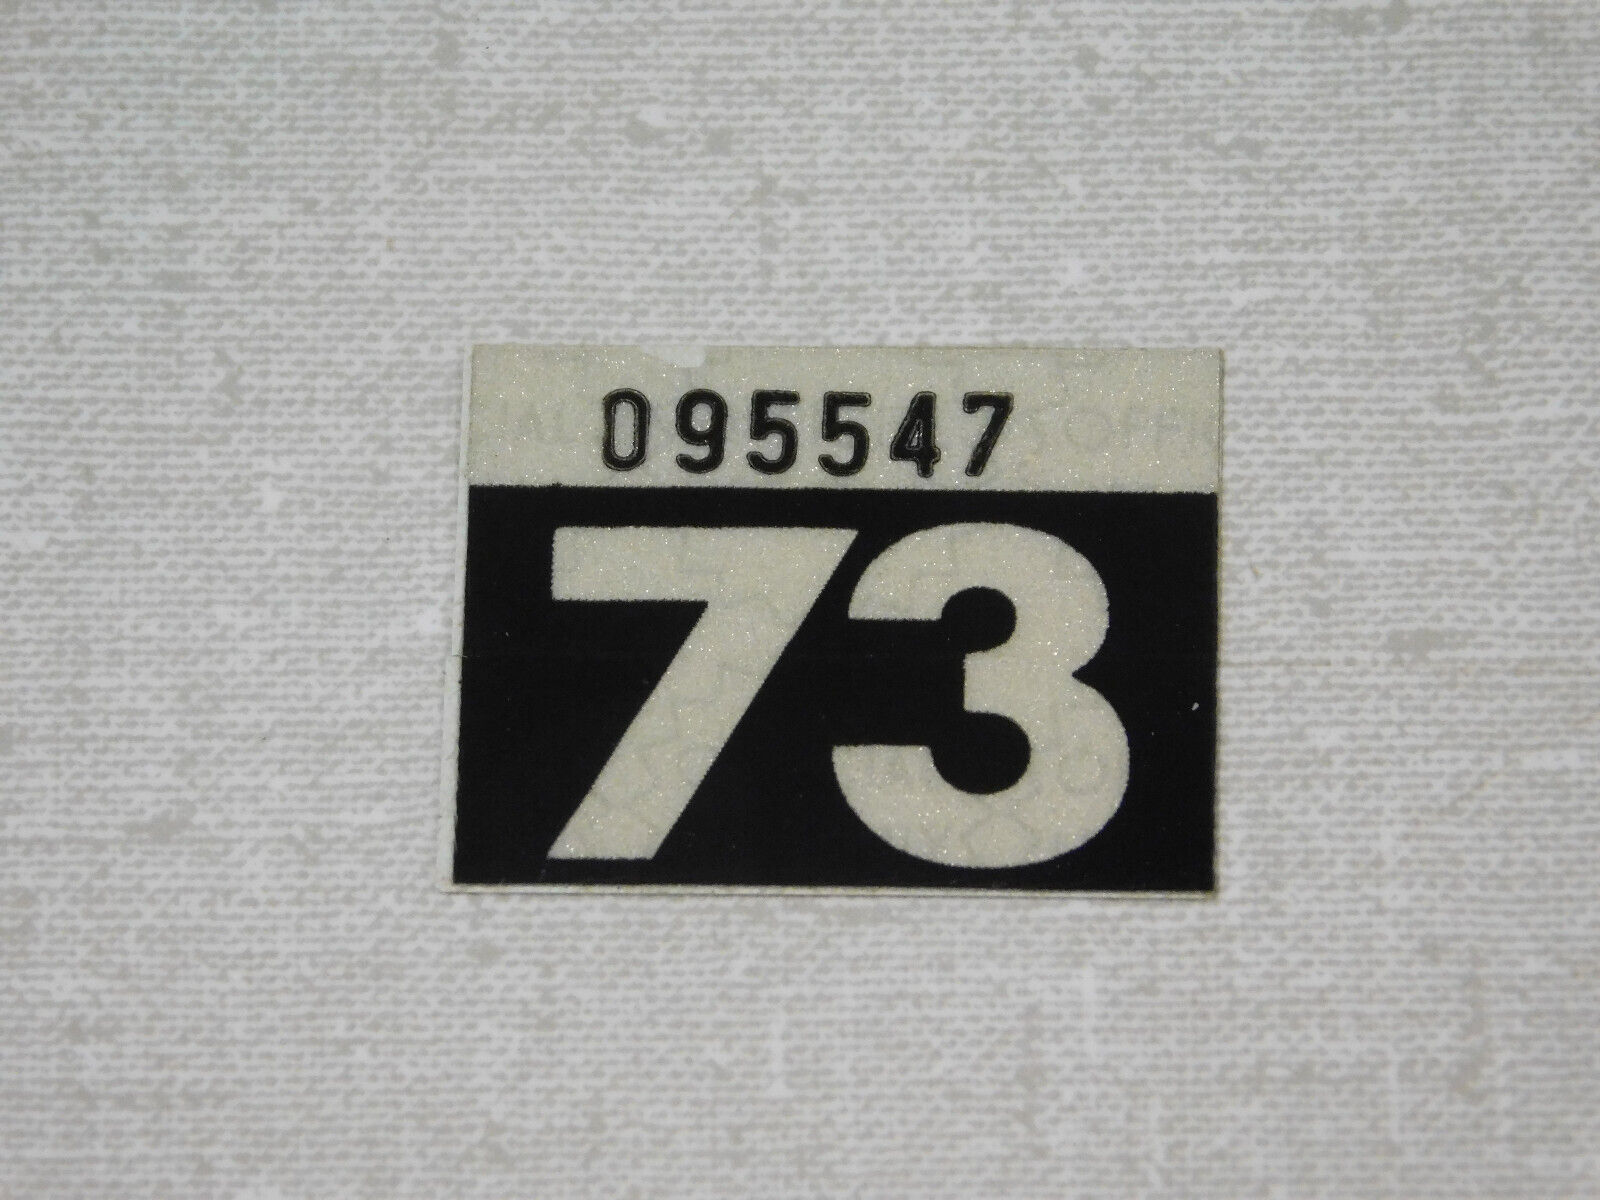 1973 Alaska passenger car license plate sticker